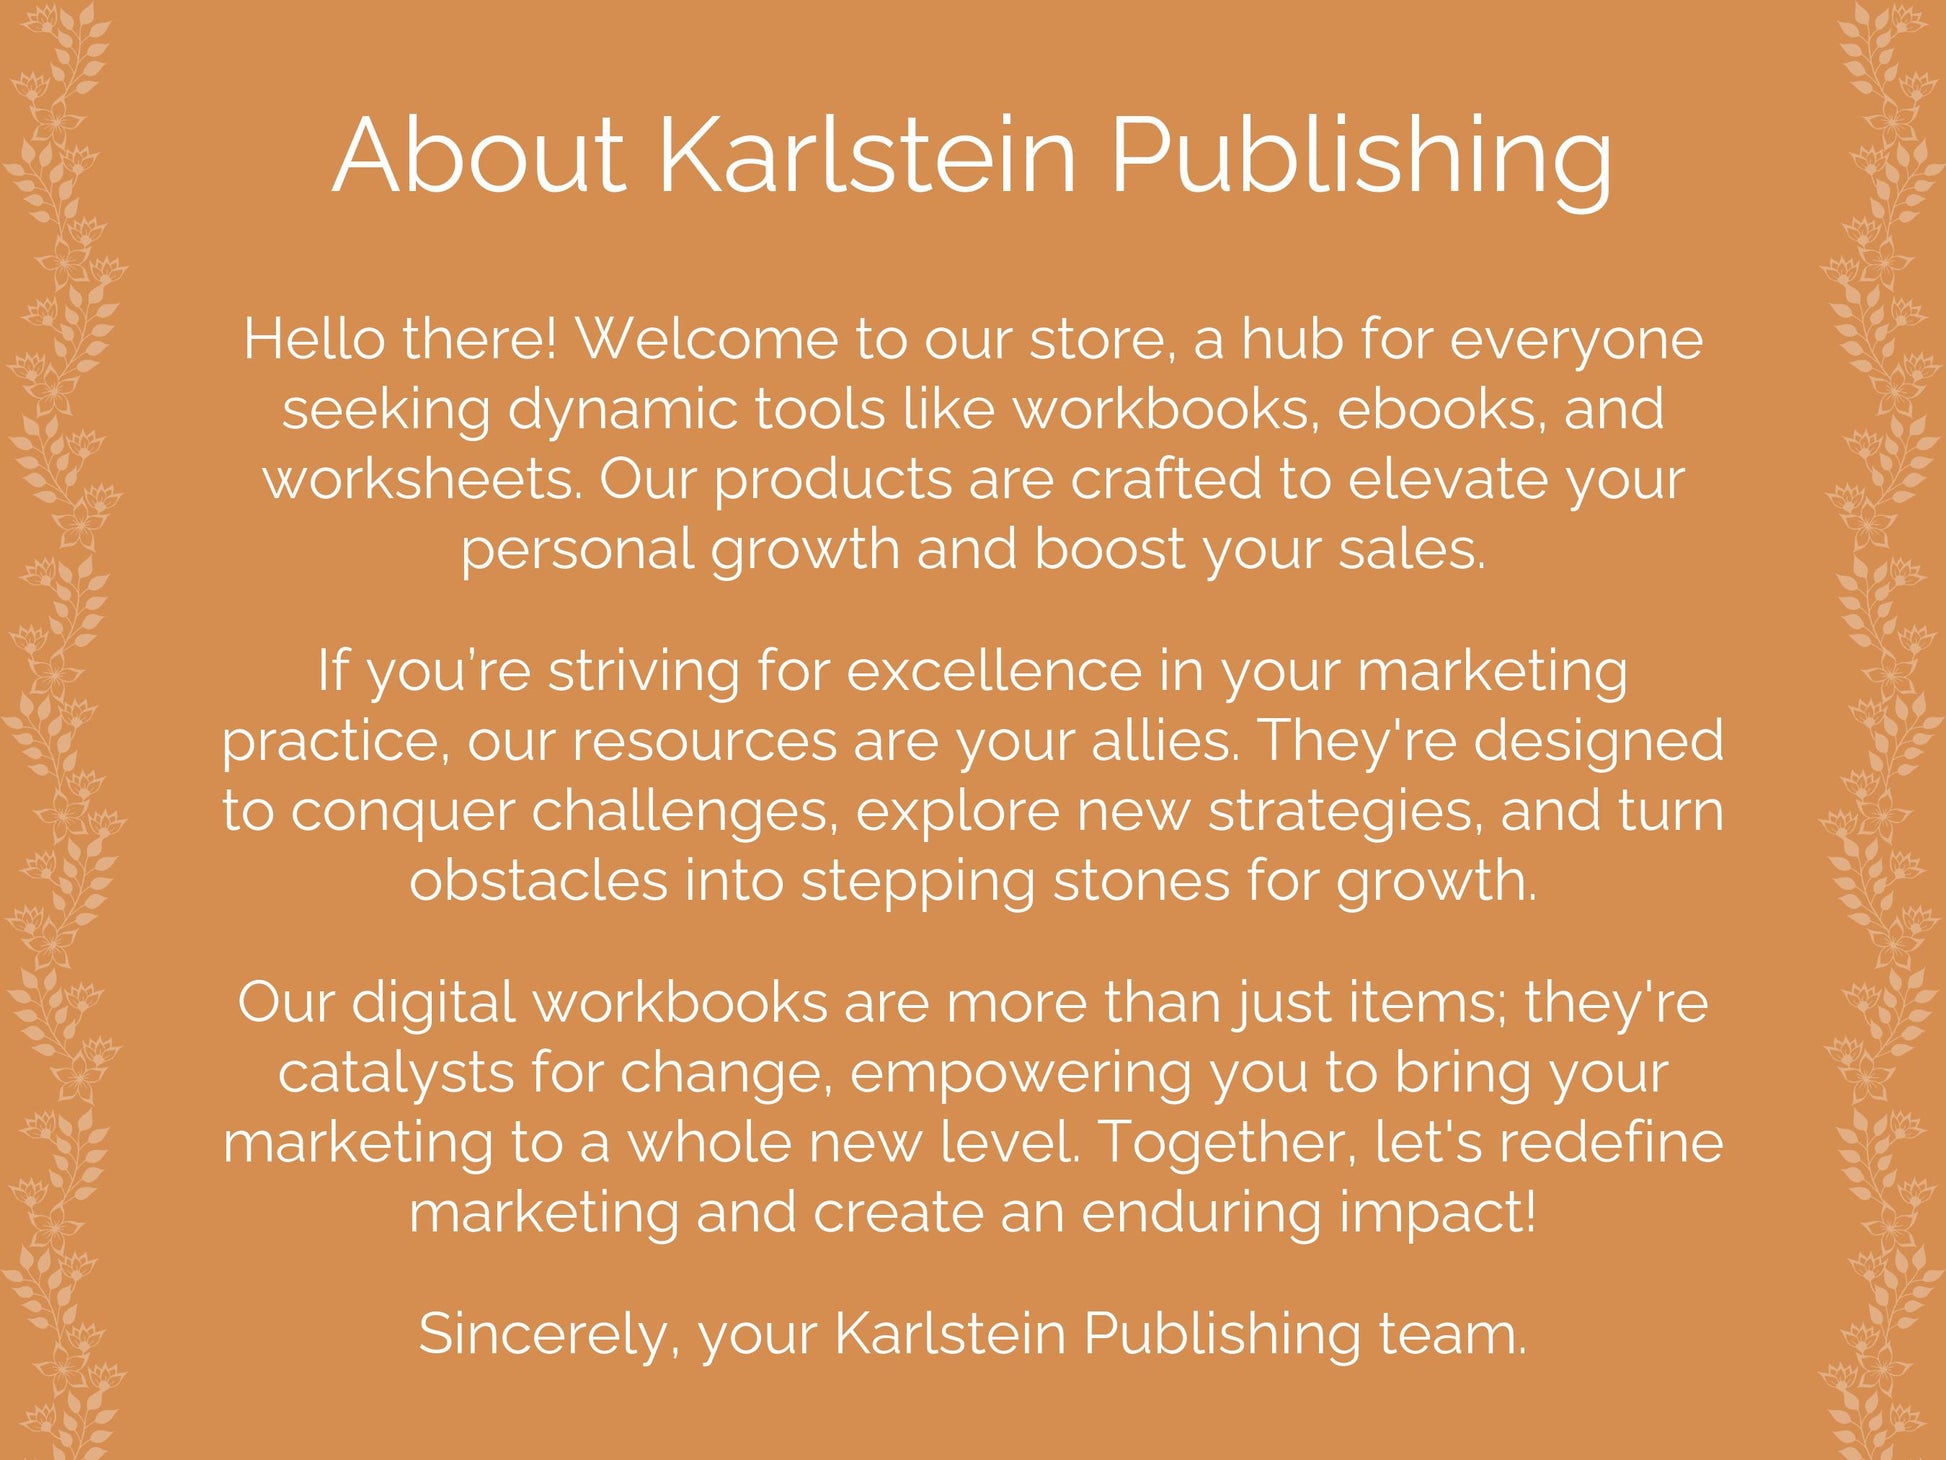 eBook Publishers Marketing Workbook